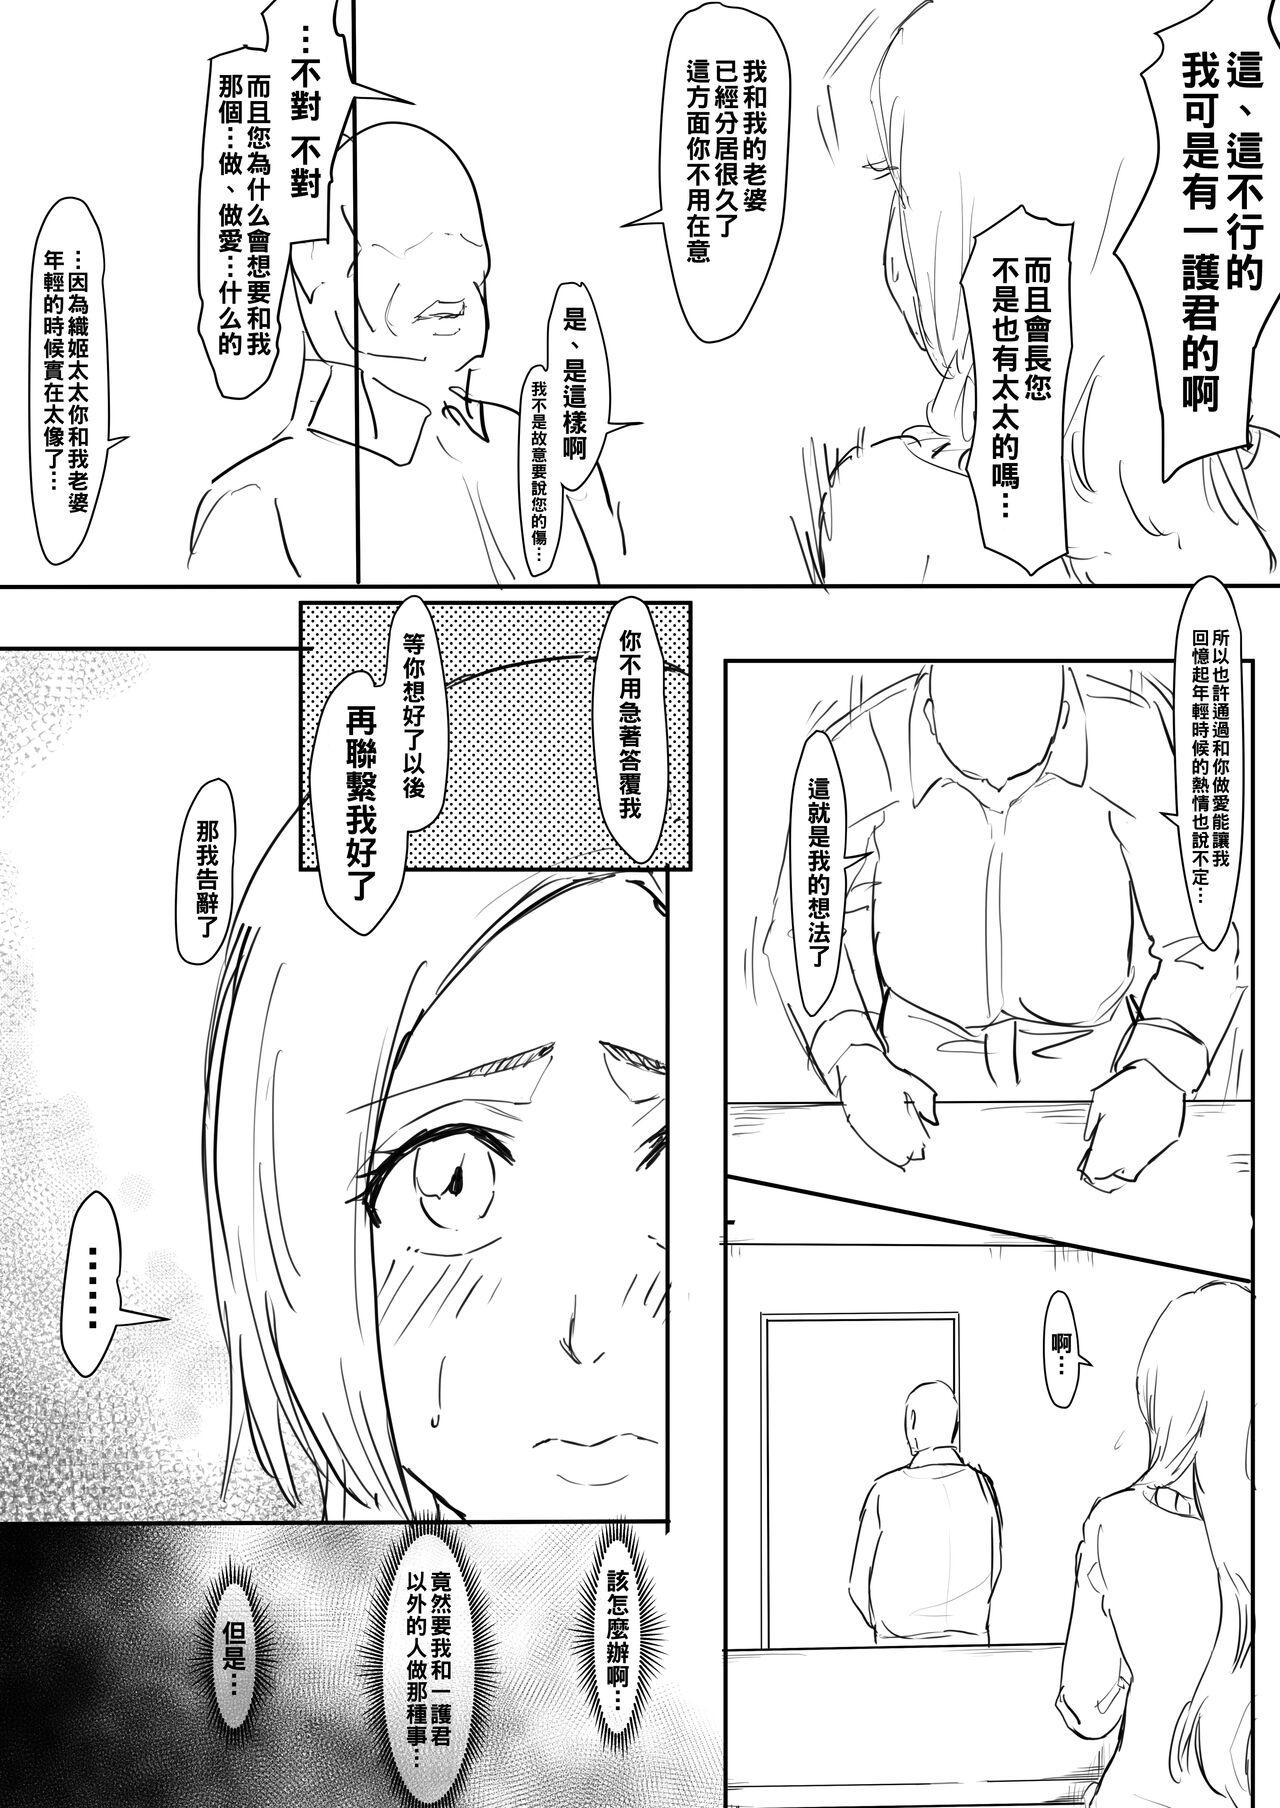 Blowjob Orihime Manga - Bleach Alt - Page 4